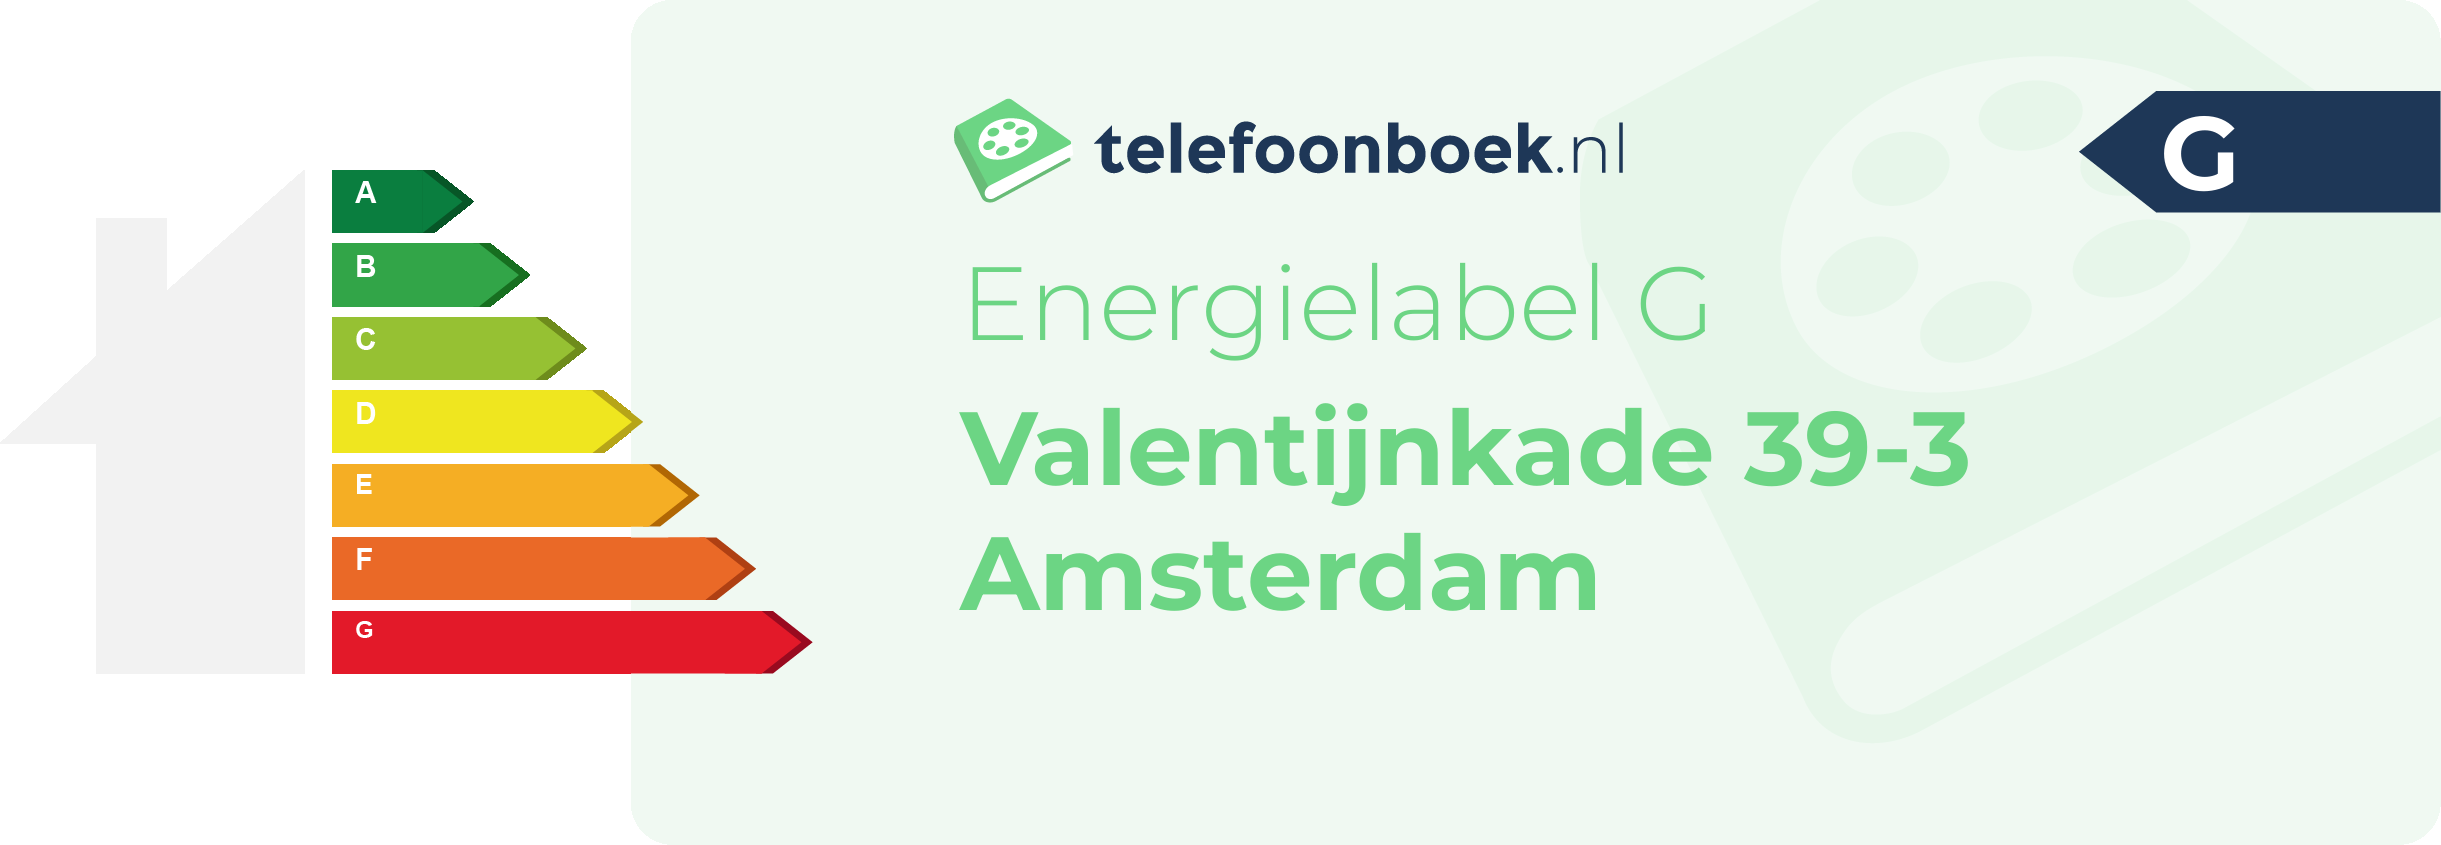 Energielabel Valentijnkade 39-3 Amsterdam